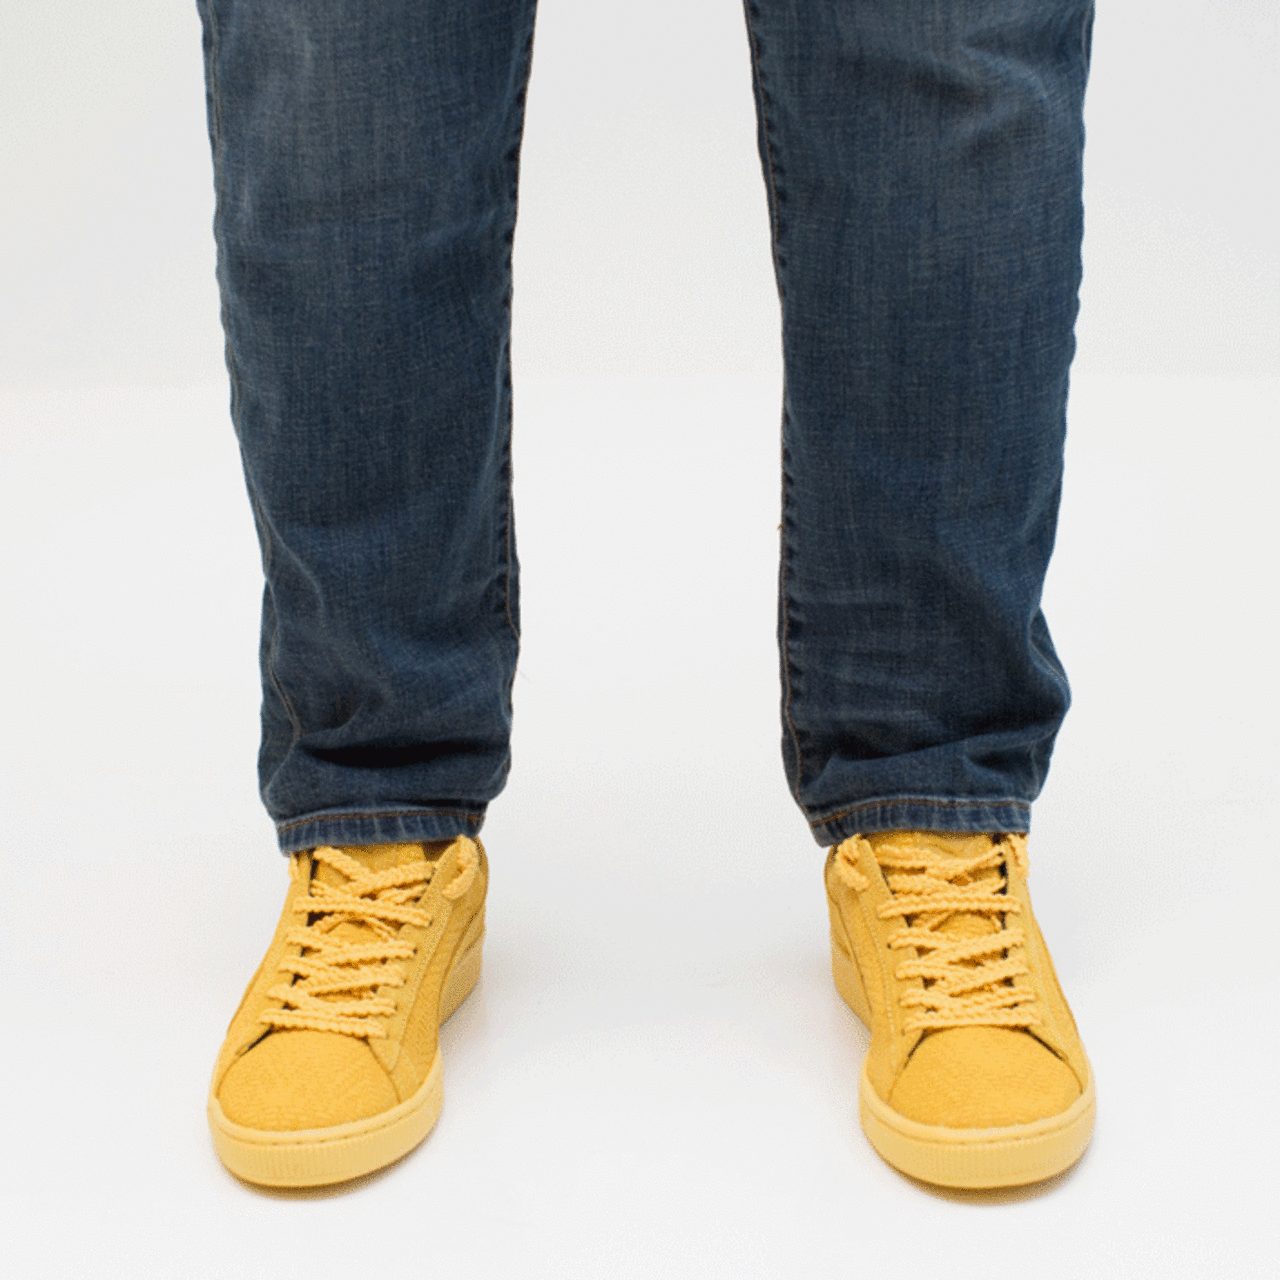 cómo to cuff jeans1